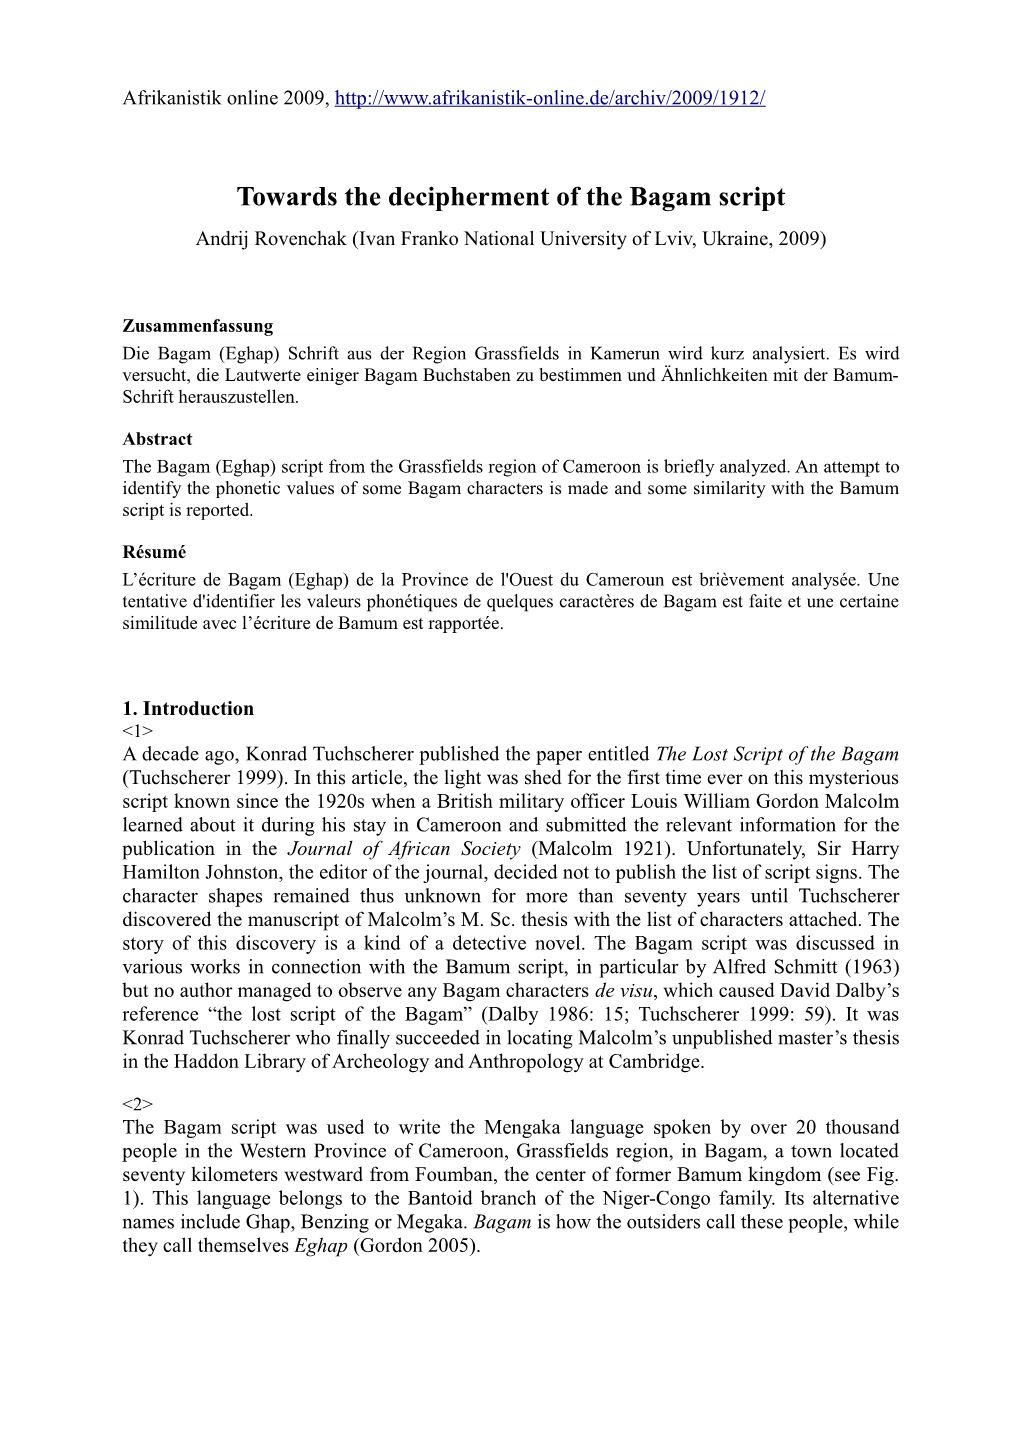 Towards the Decipherment of the Bagam Script Andrij Rovenchak (Ivan Franko National University of Lviv, Ukraine, 2009)